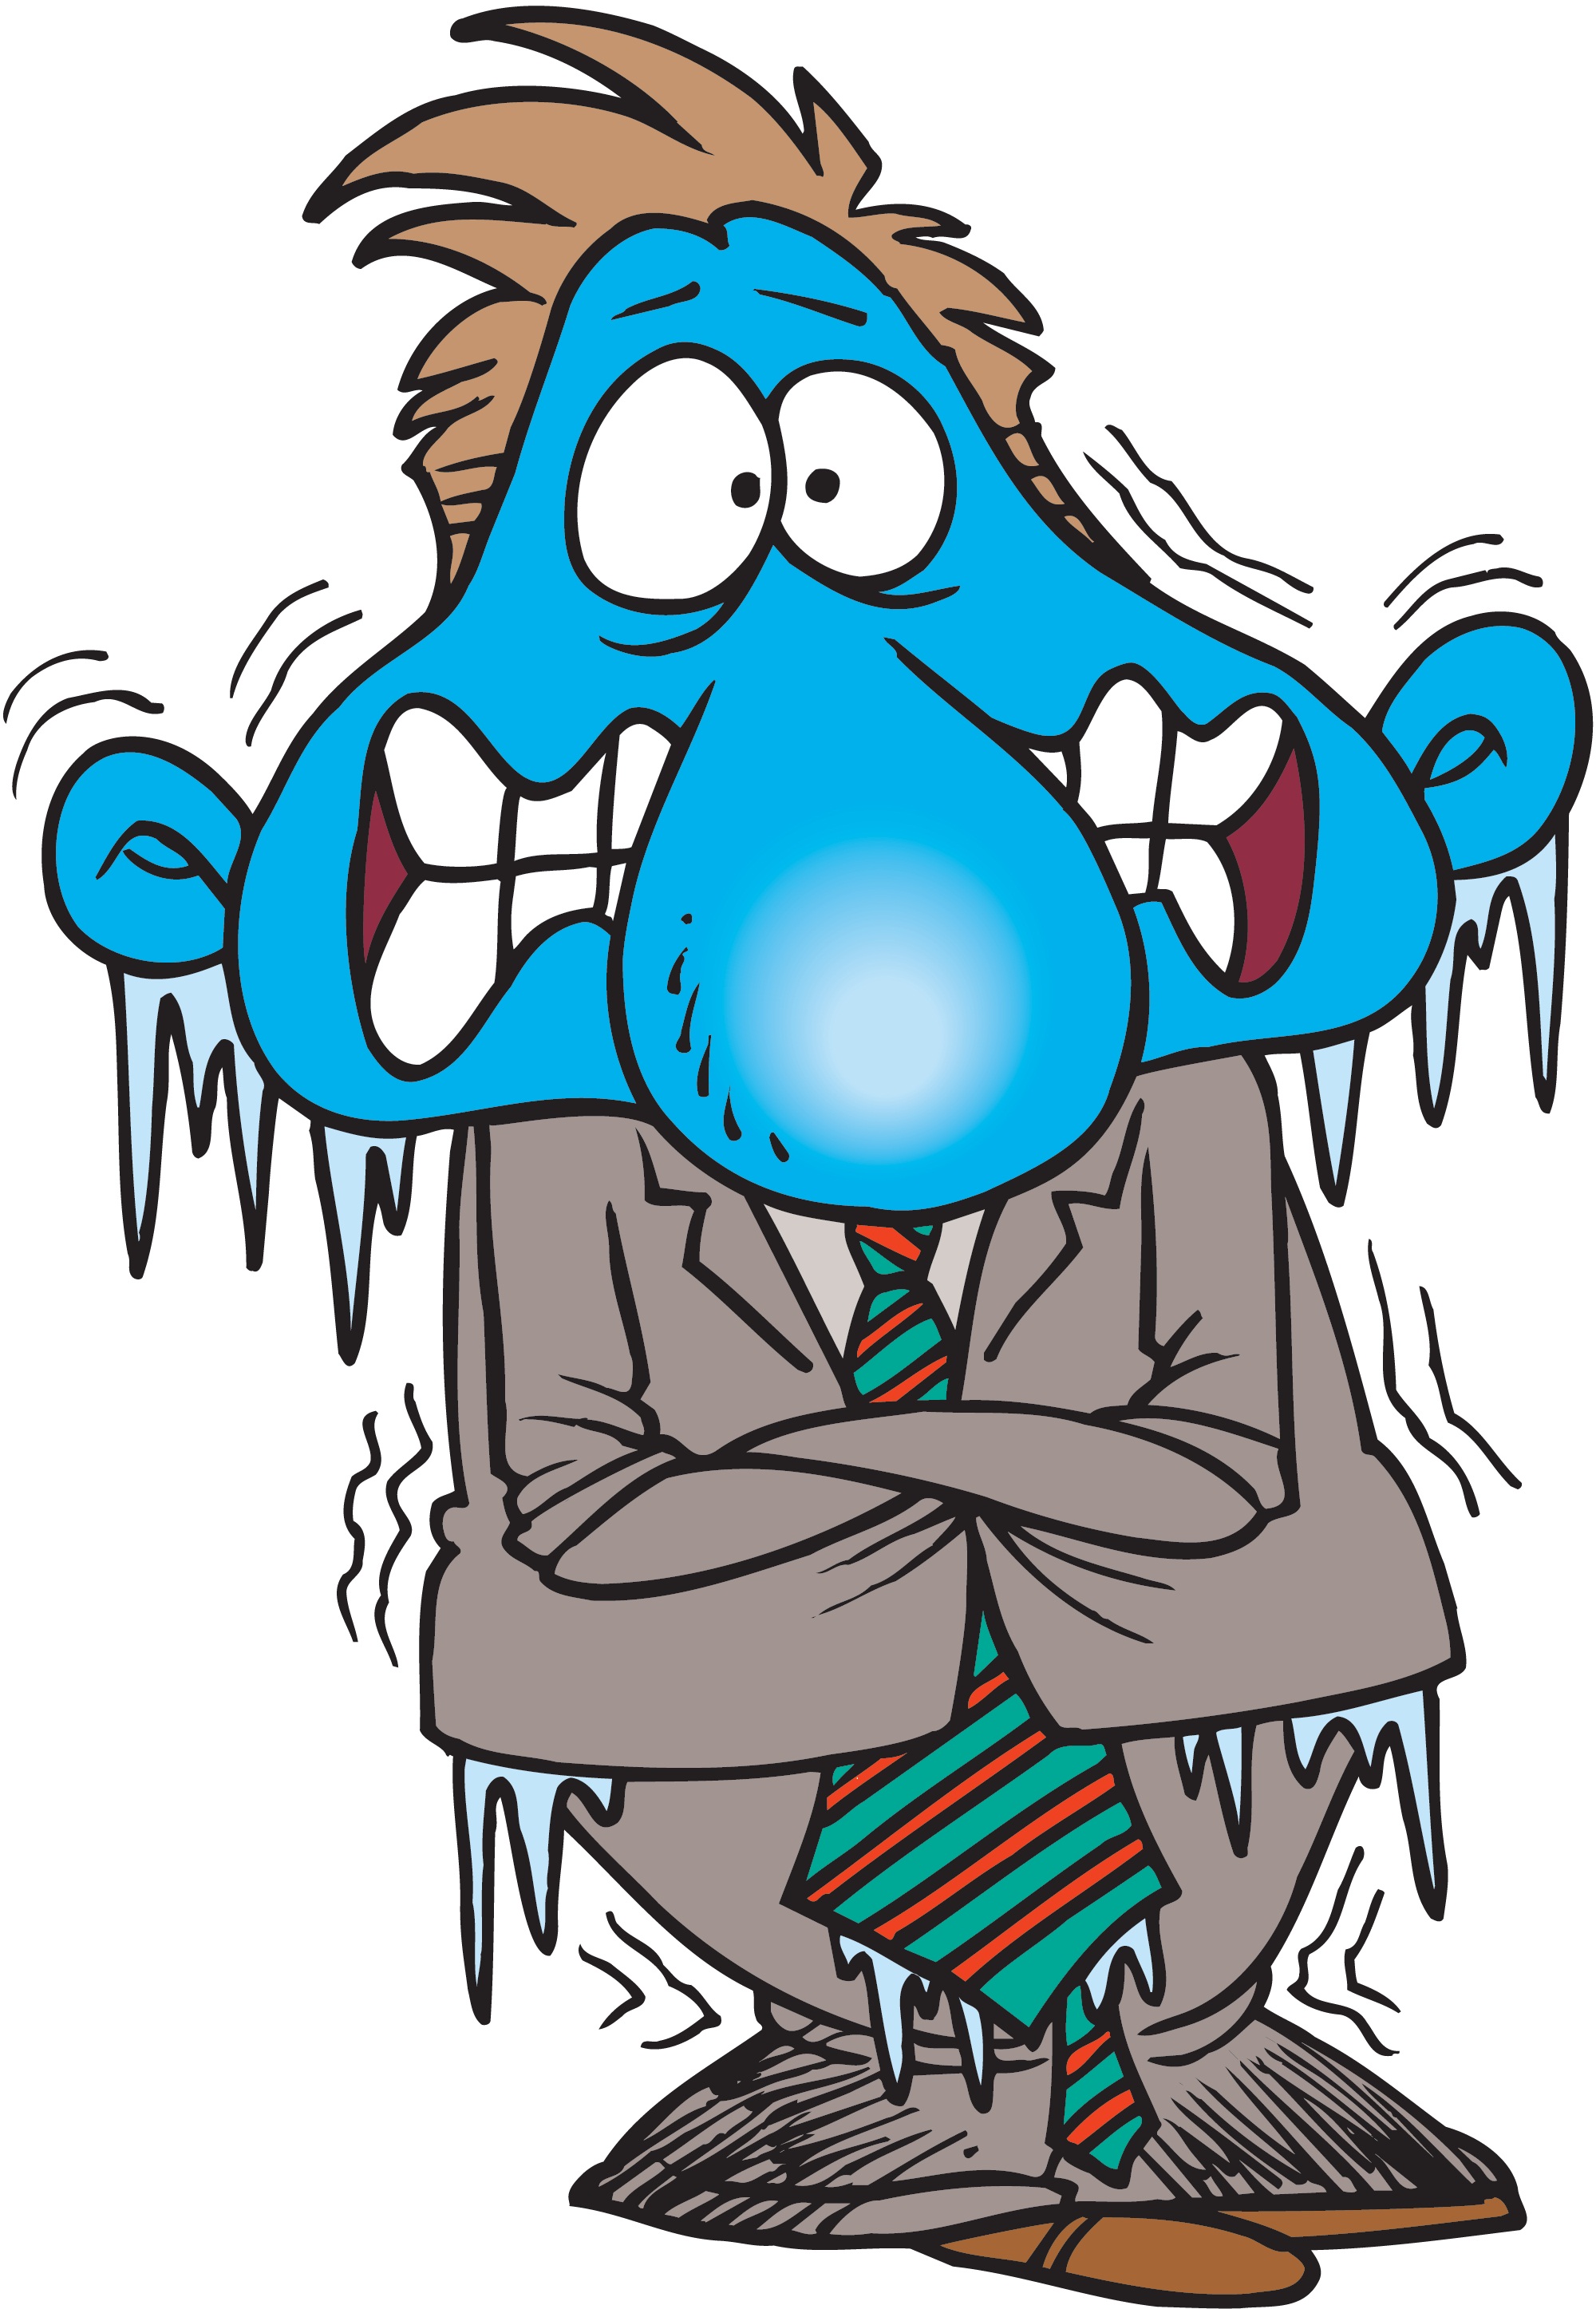 freezing-cold-person-cartoon.jpg